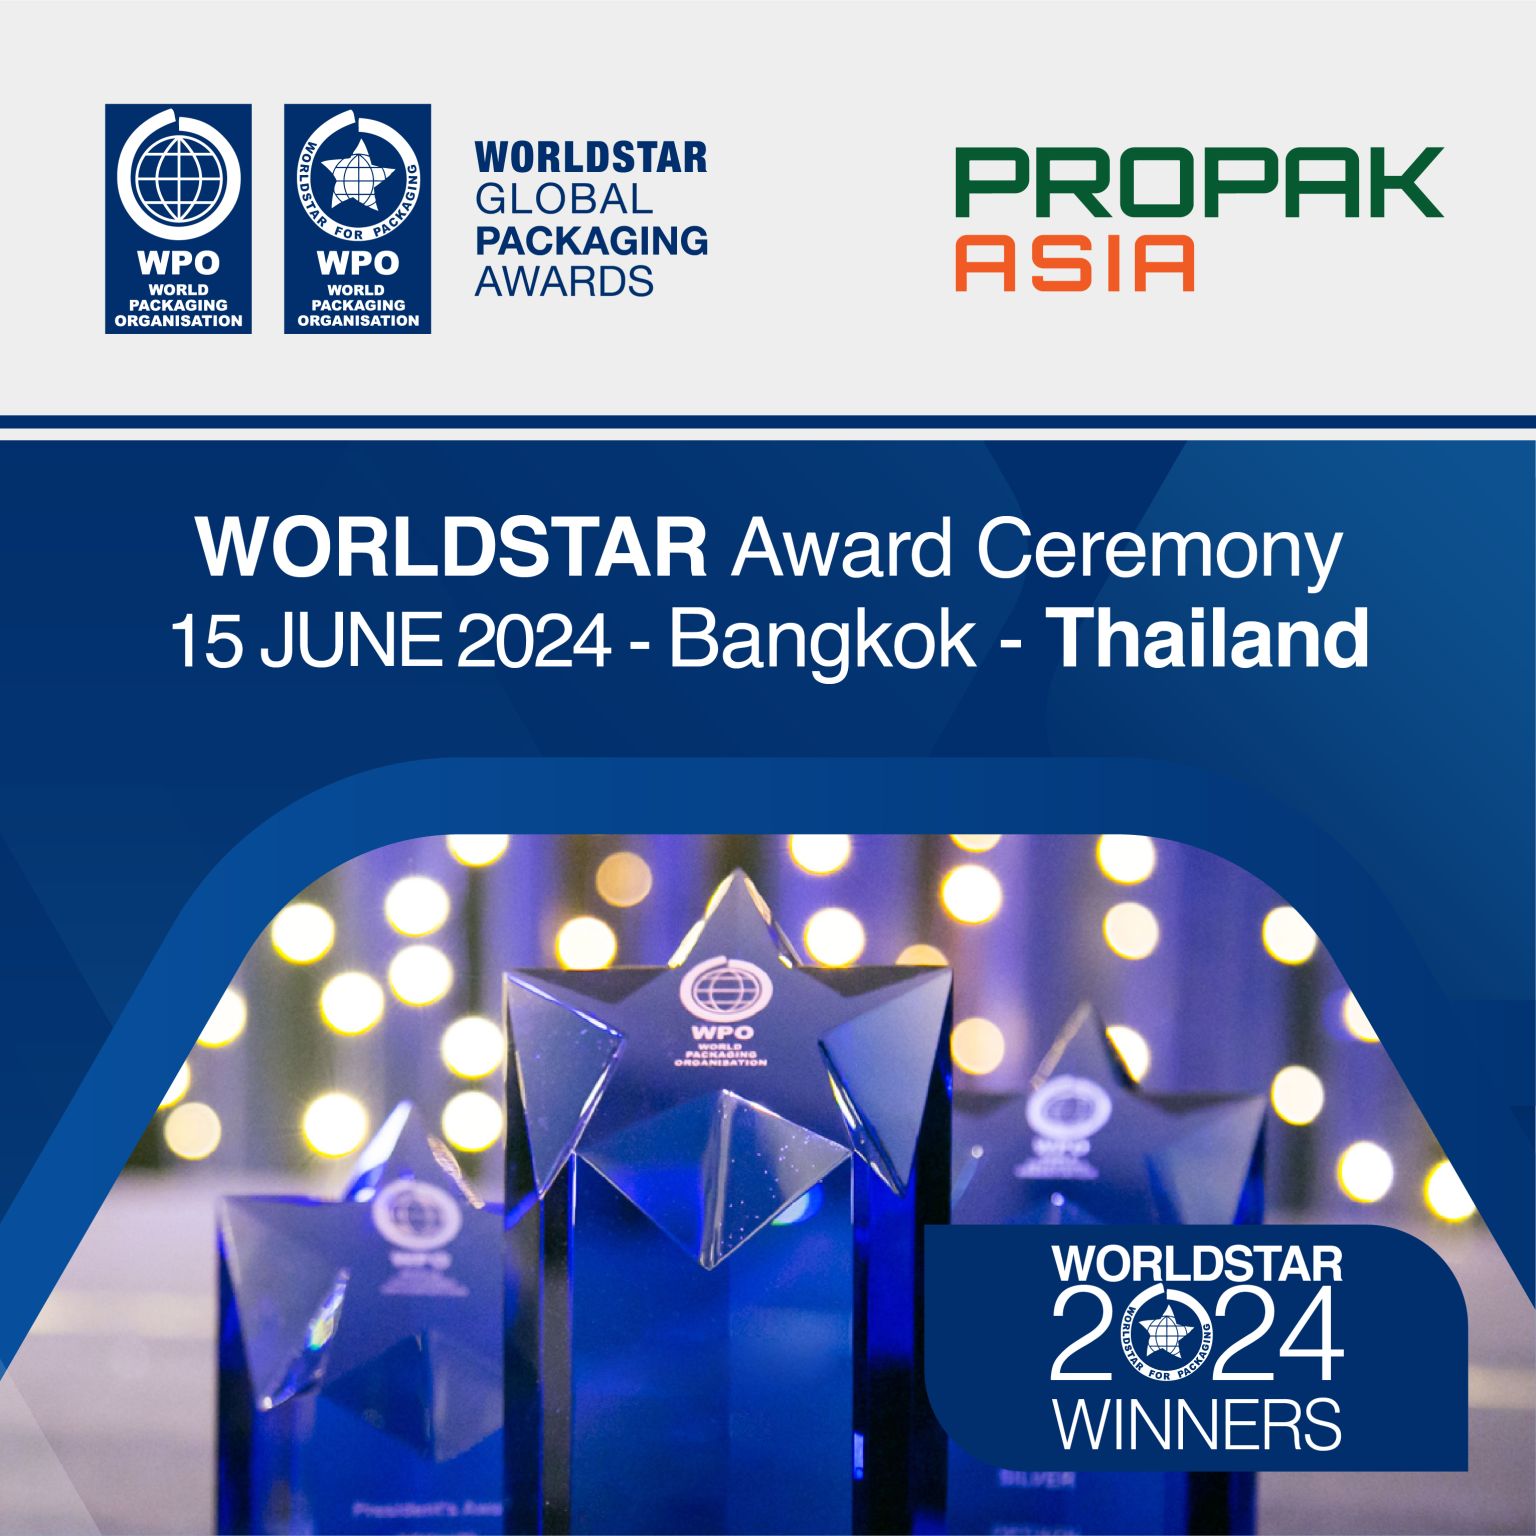 WorldStar Awards Ceremony for 2024 